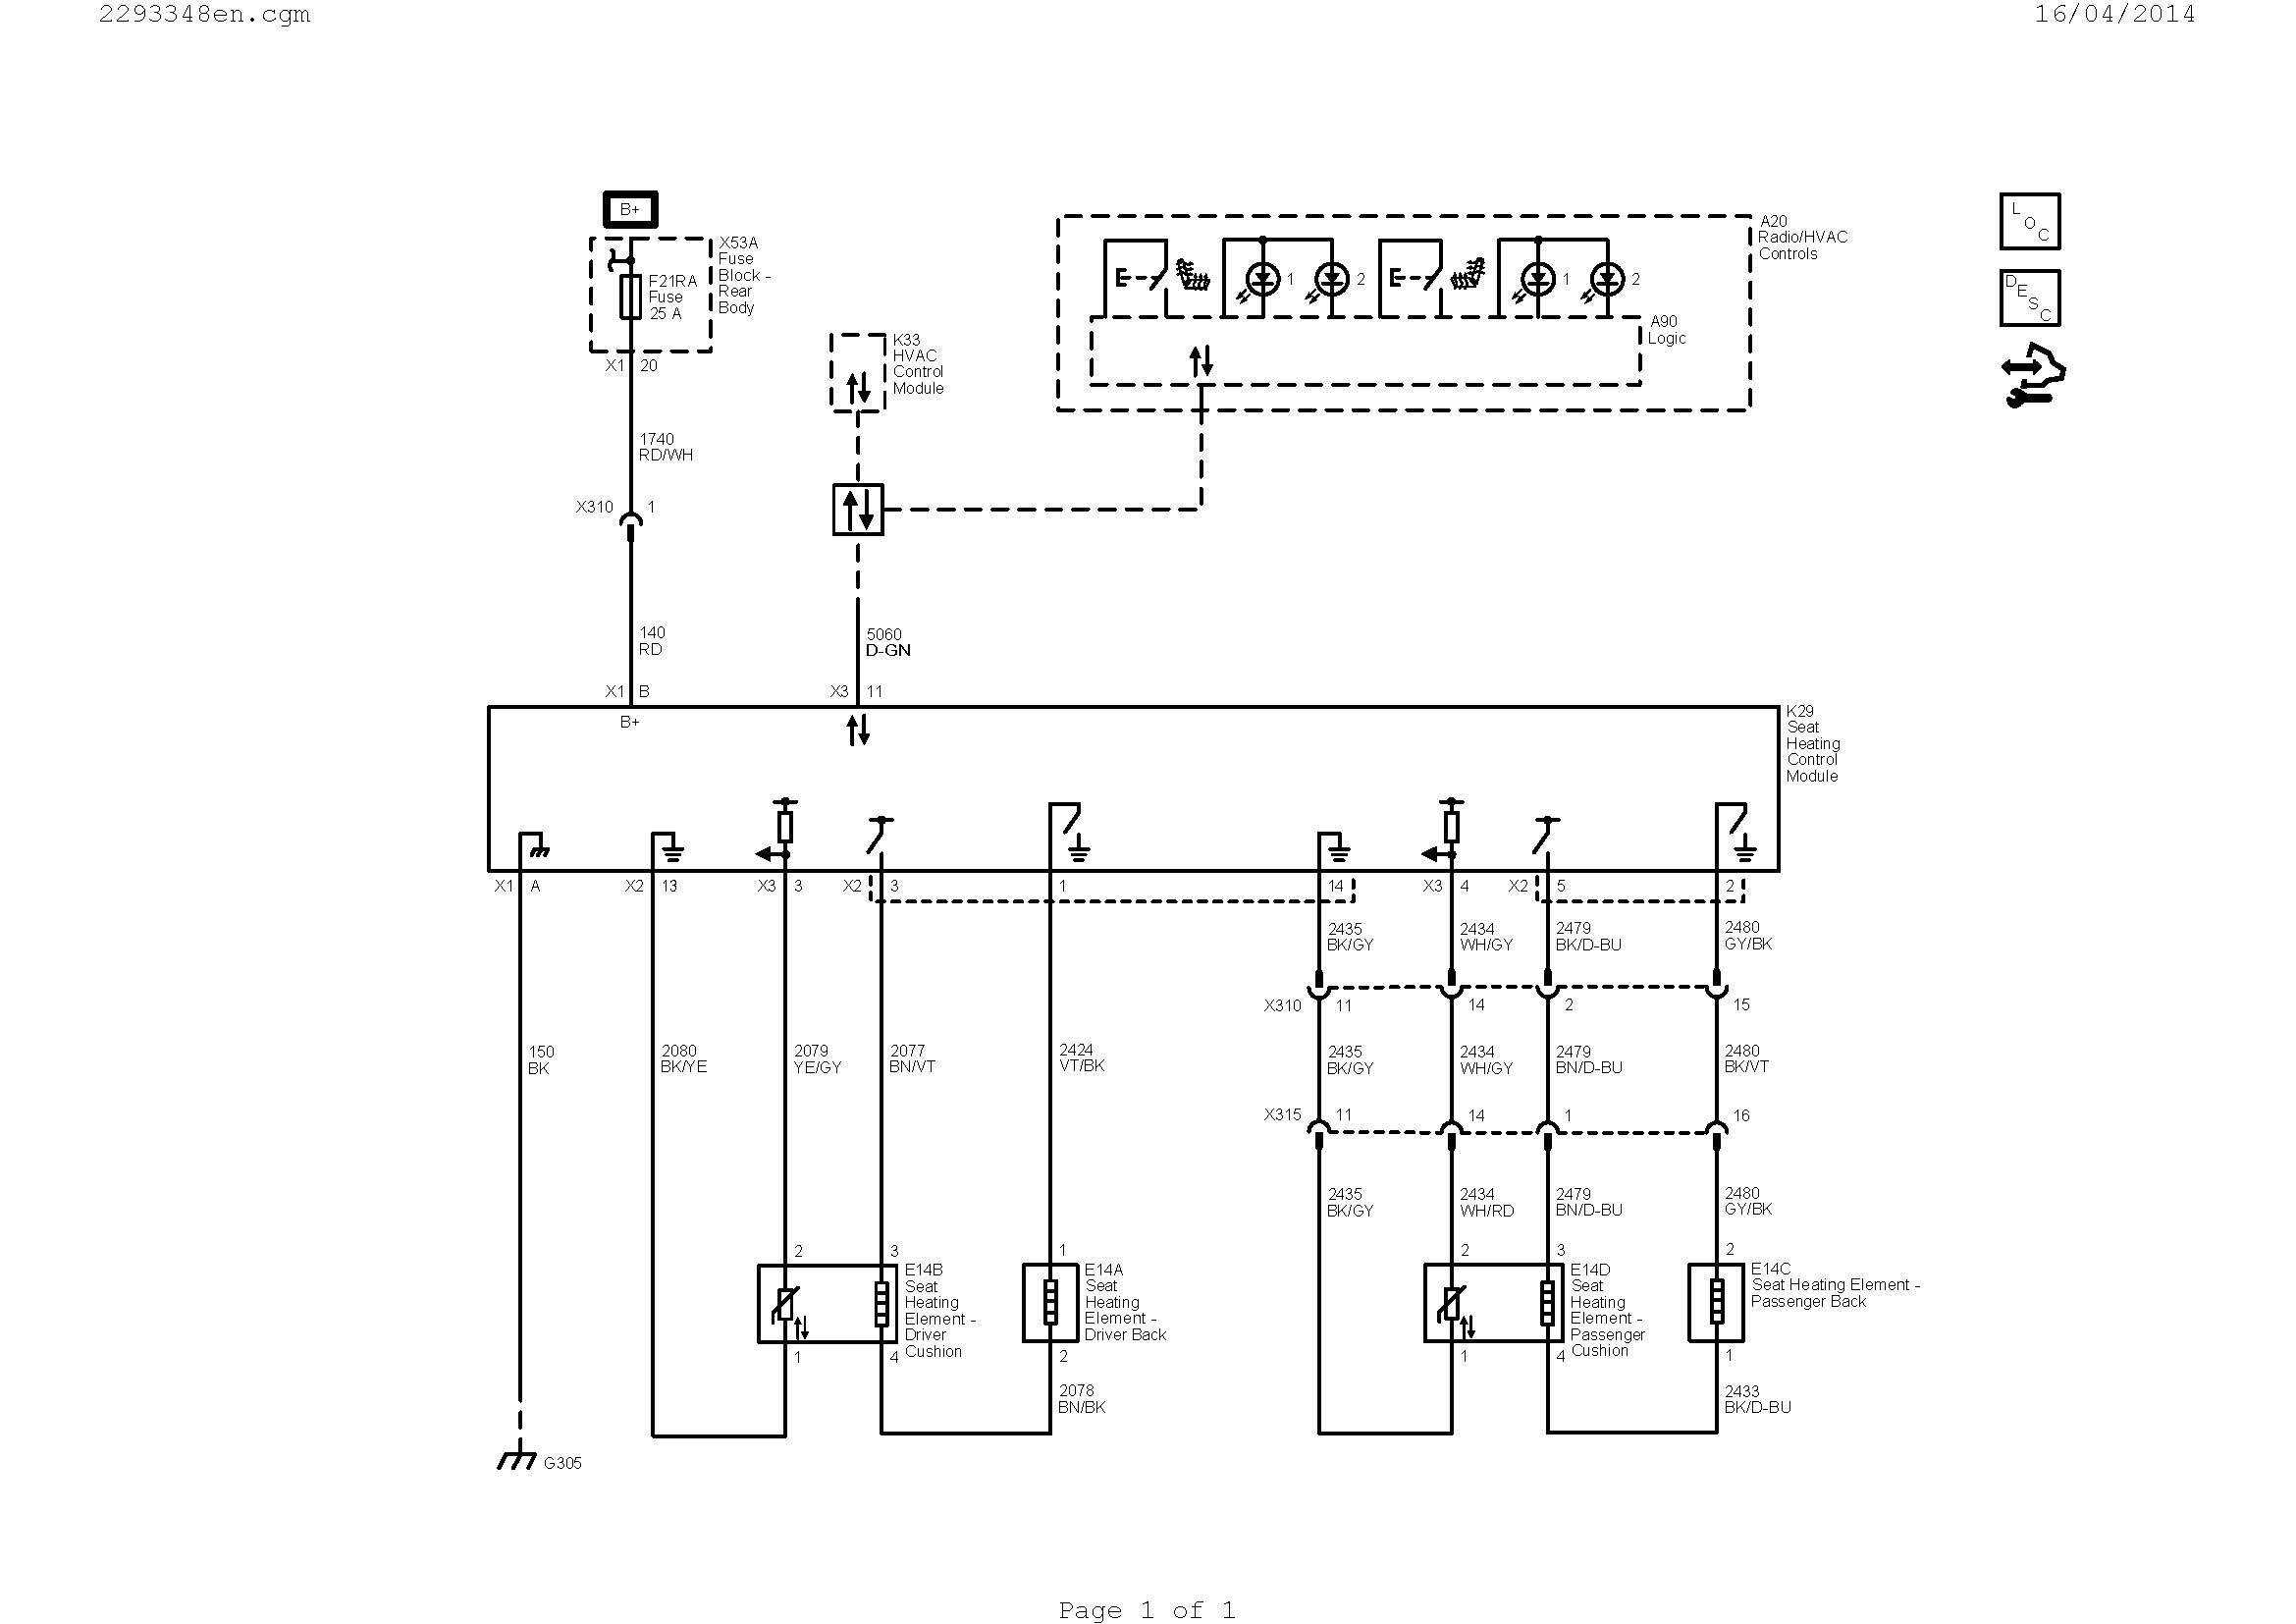 Simple Wiring Diagram Electrical Wiring Diagrams New Phone Wiring Diagram New Best Wiring Diagram Od